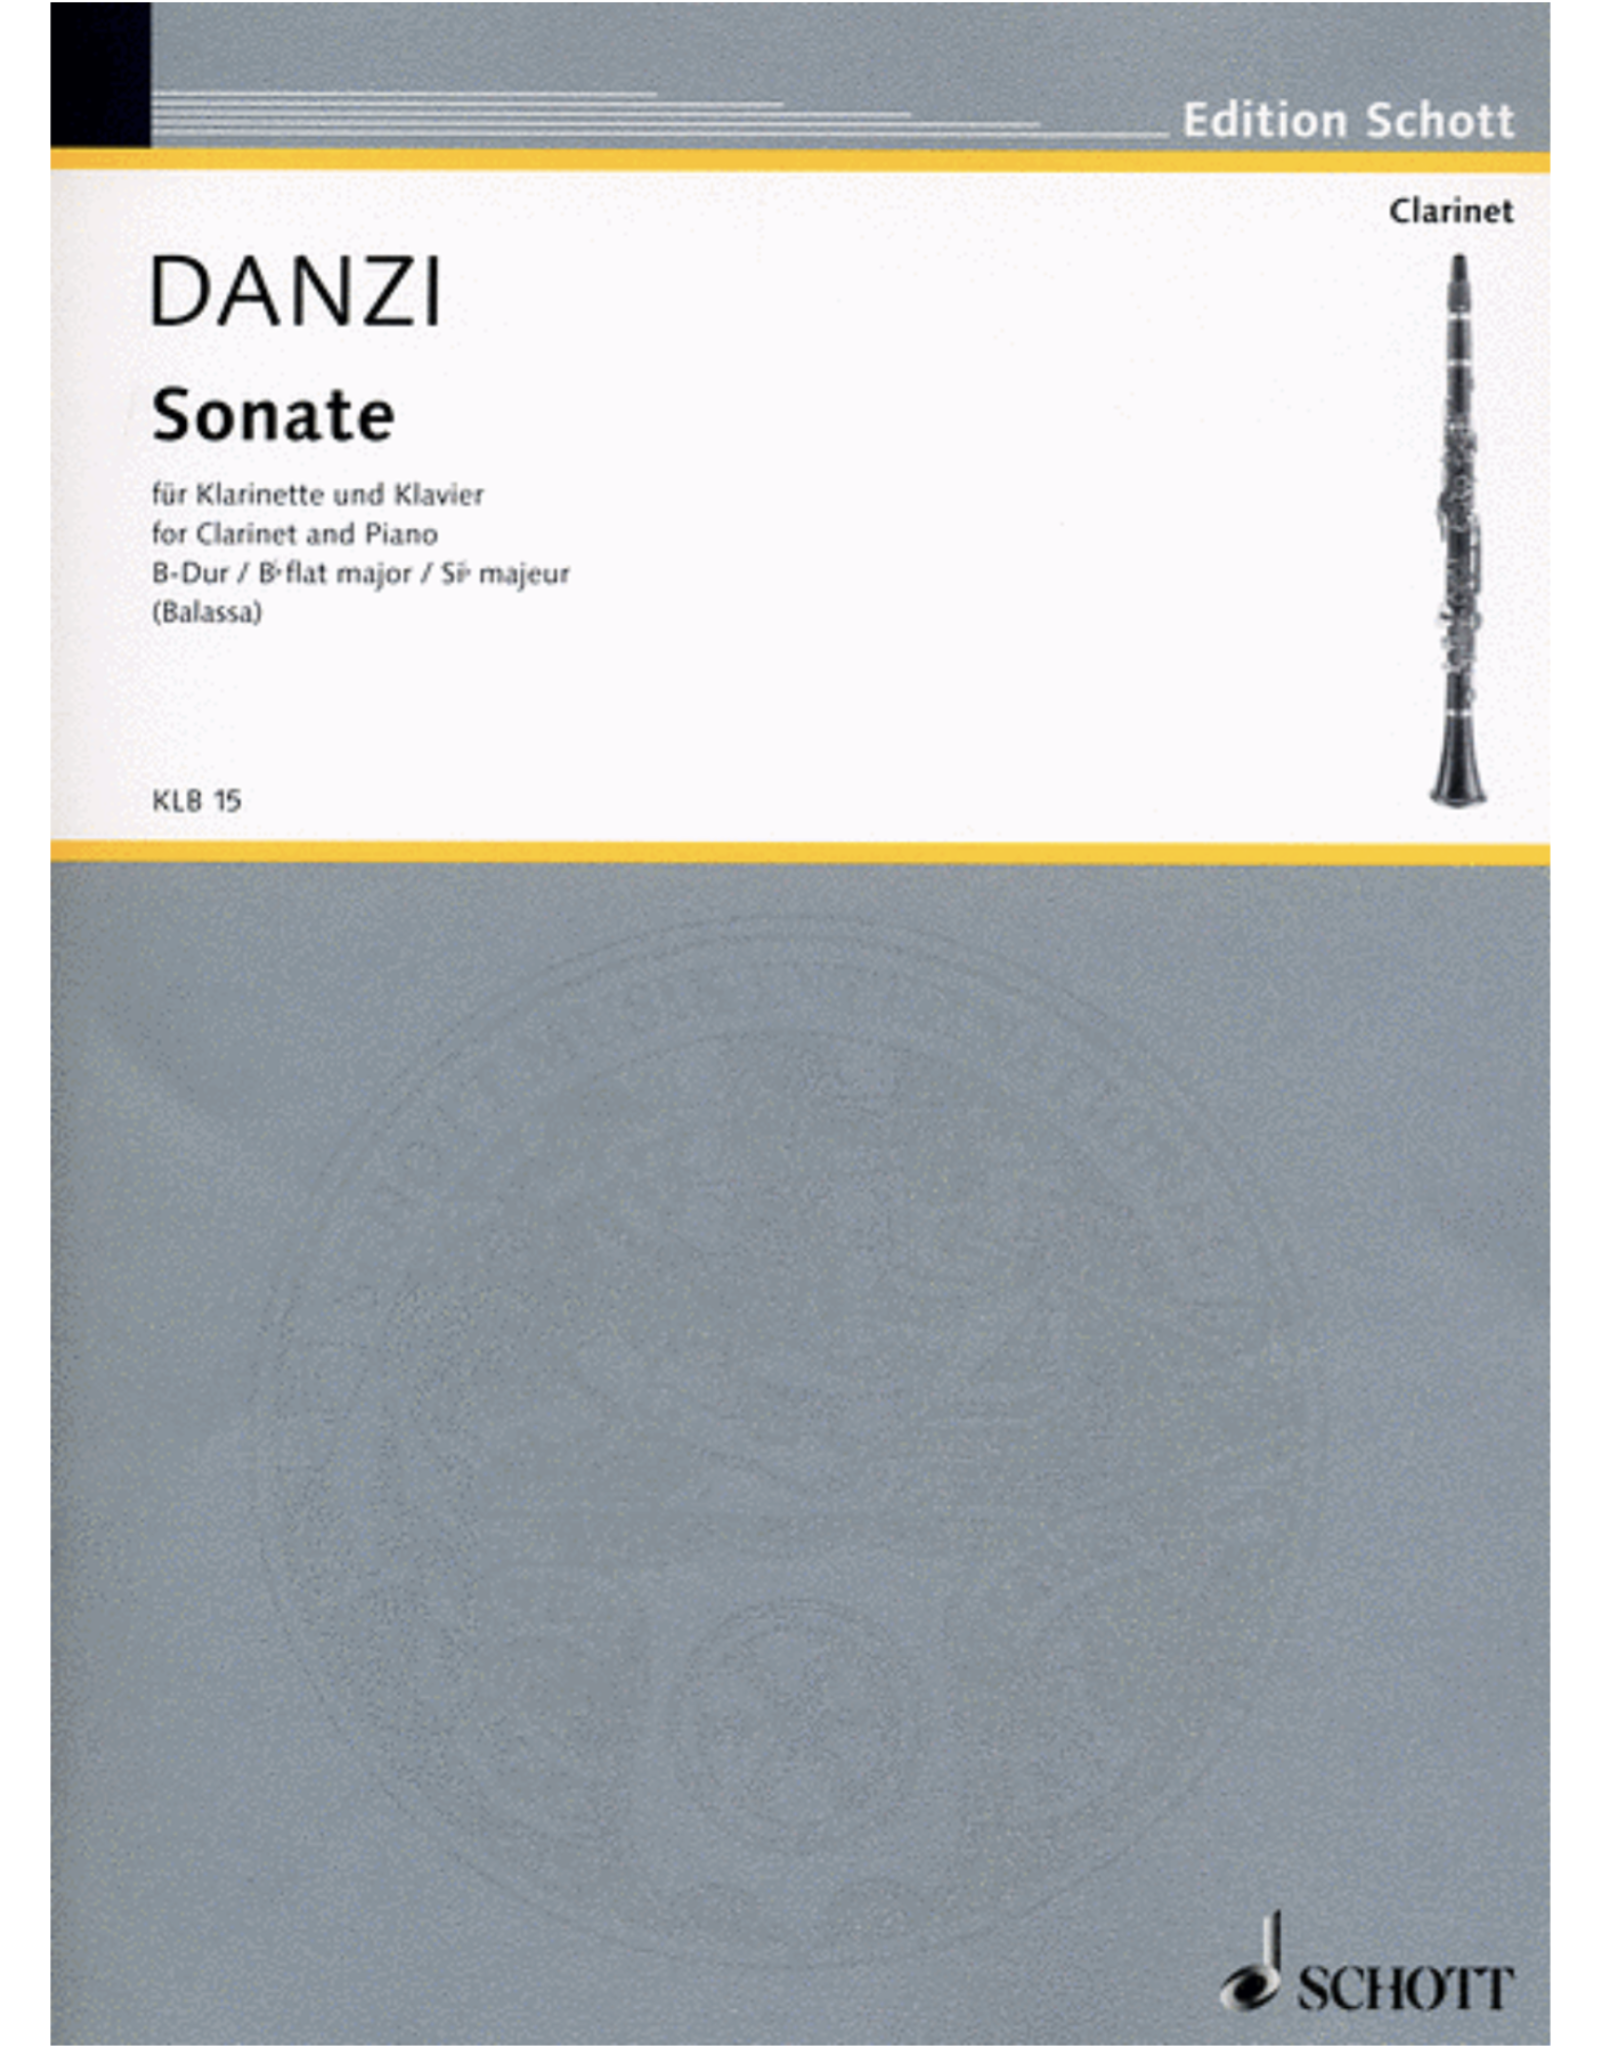 Edition Schott Danzi Sonate for Clarinet and Piano